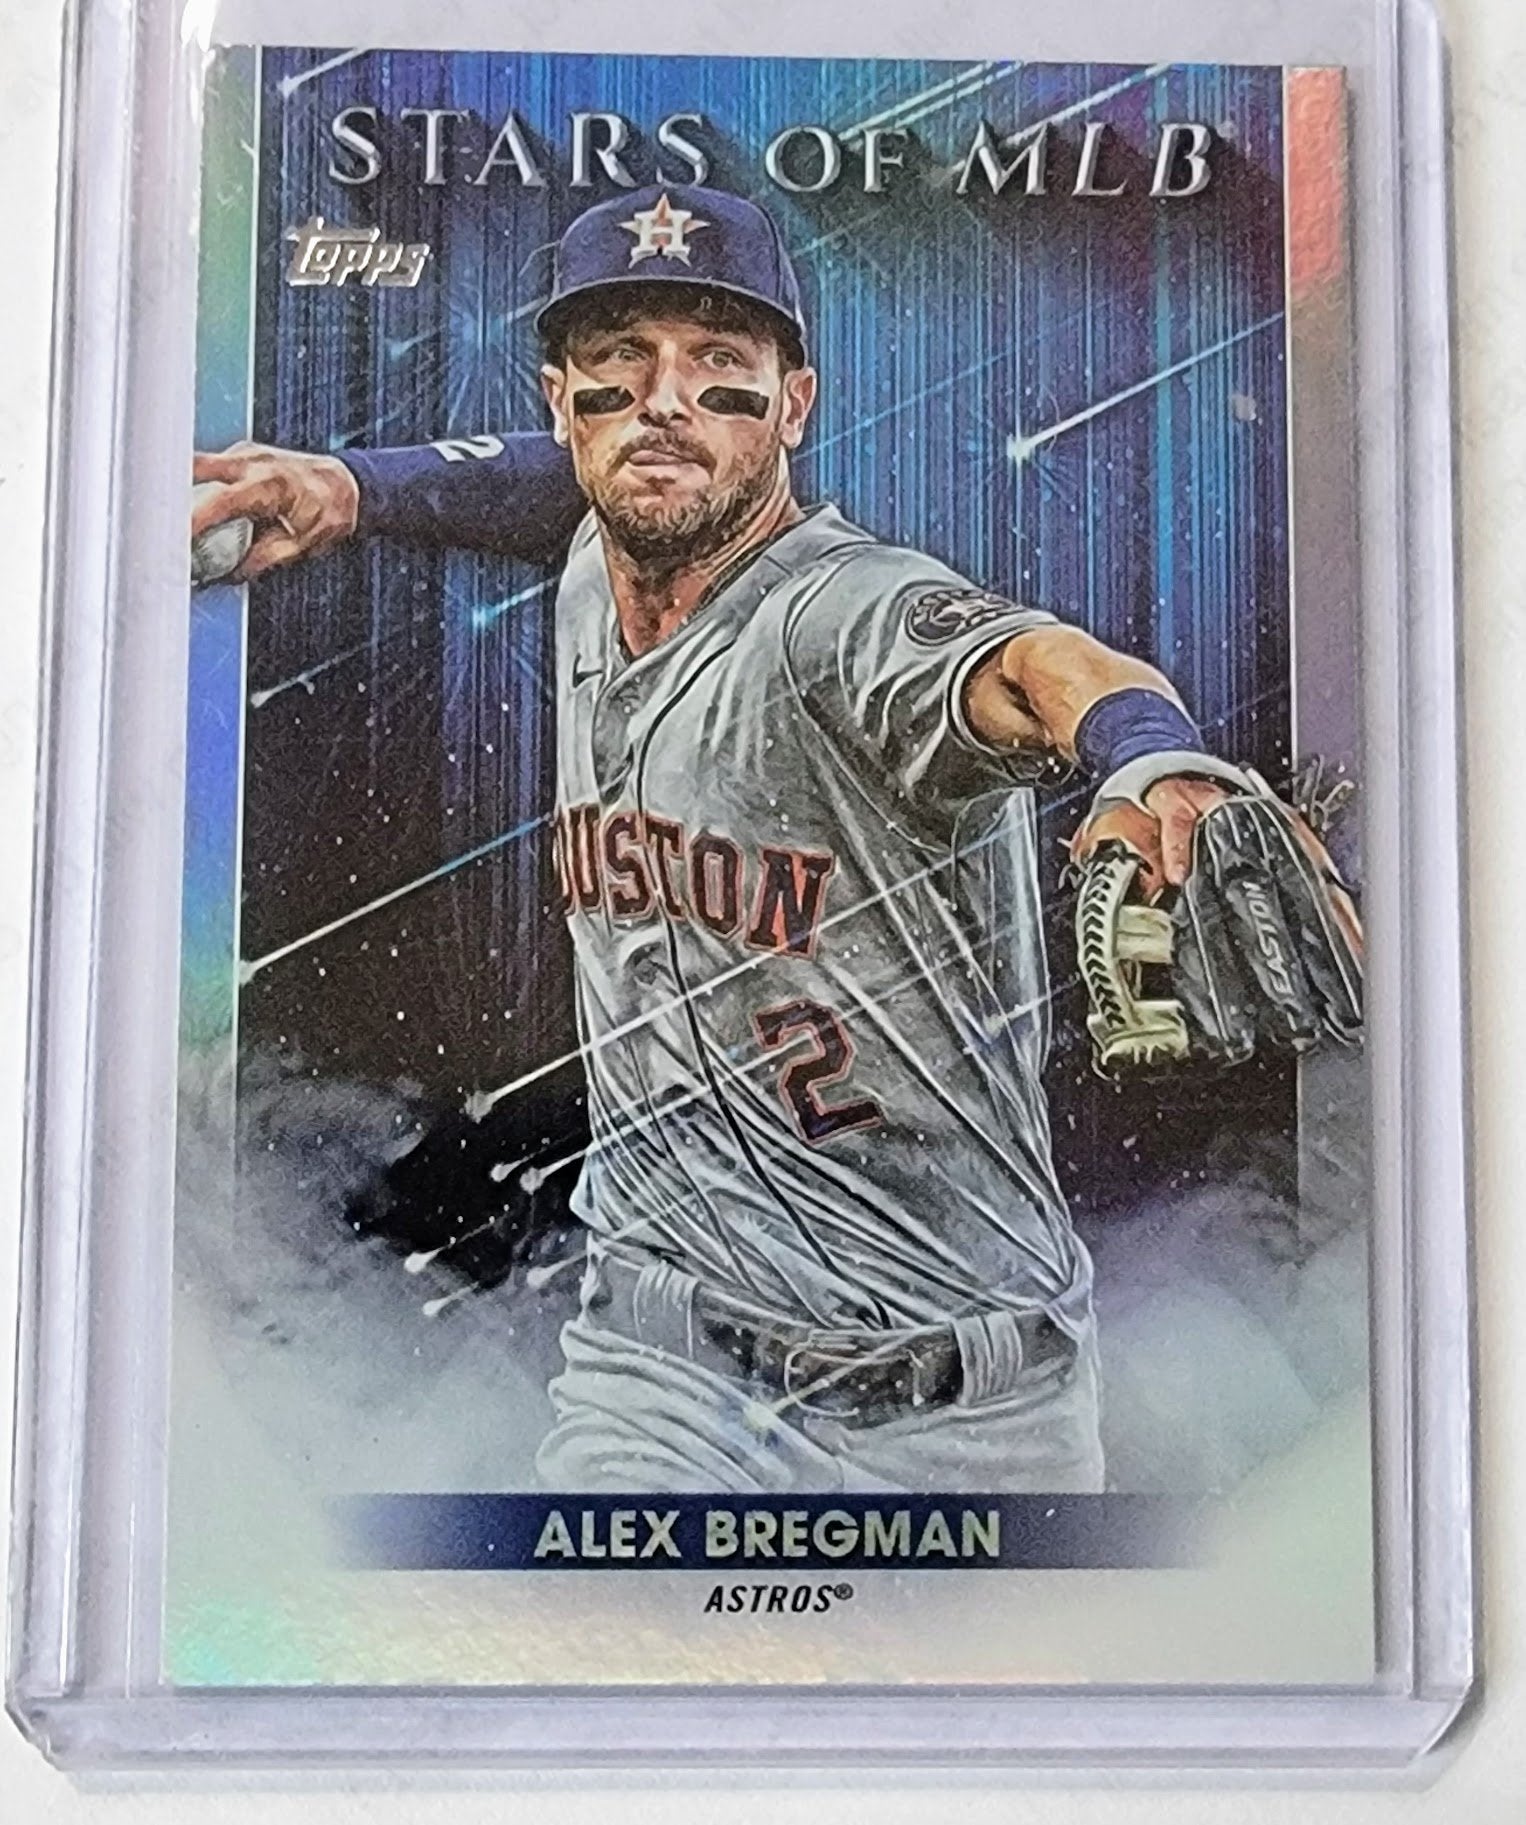 2022 Topps Alex Bregman Stars of the MLB Baseball Trading Card